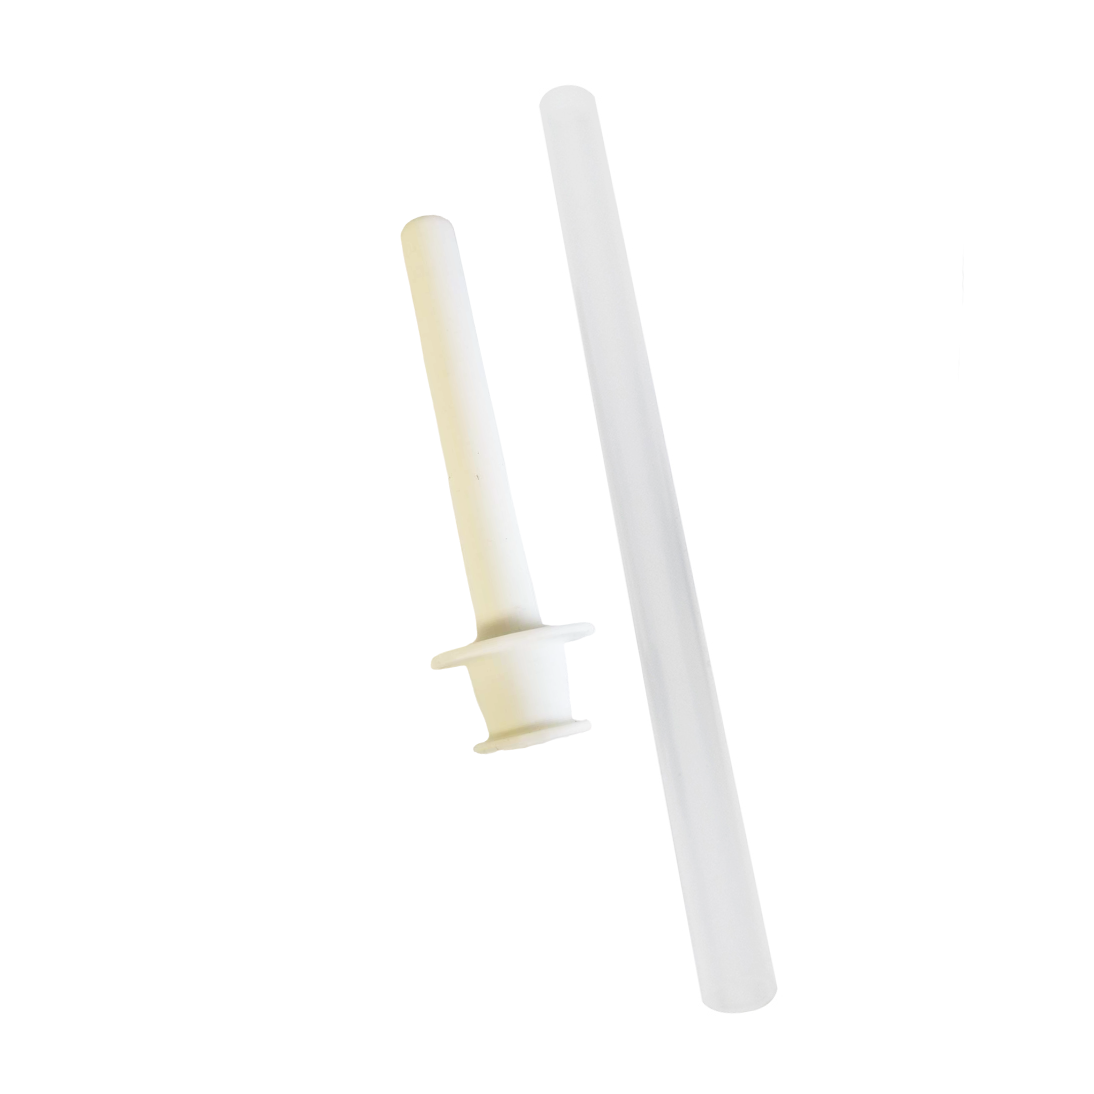  Hydrapeak Replacement Straw Set for 40oz Voyager, Reusable  Straws, 40 Oz Tumbler Straw, 3 Pack (Alpine) : Home & Kitchen